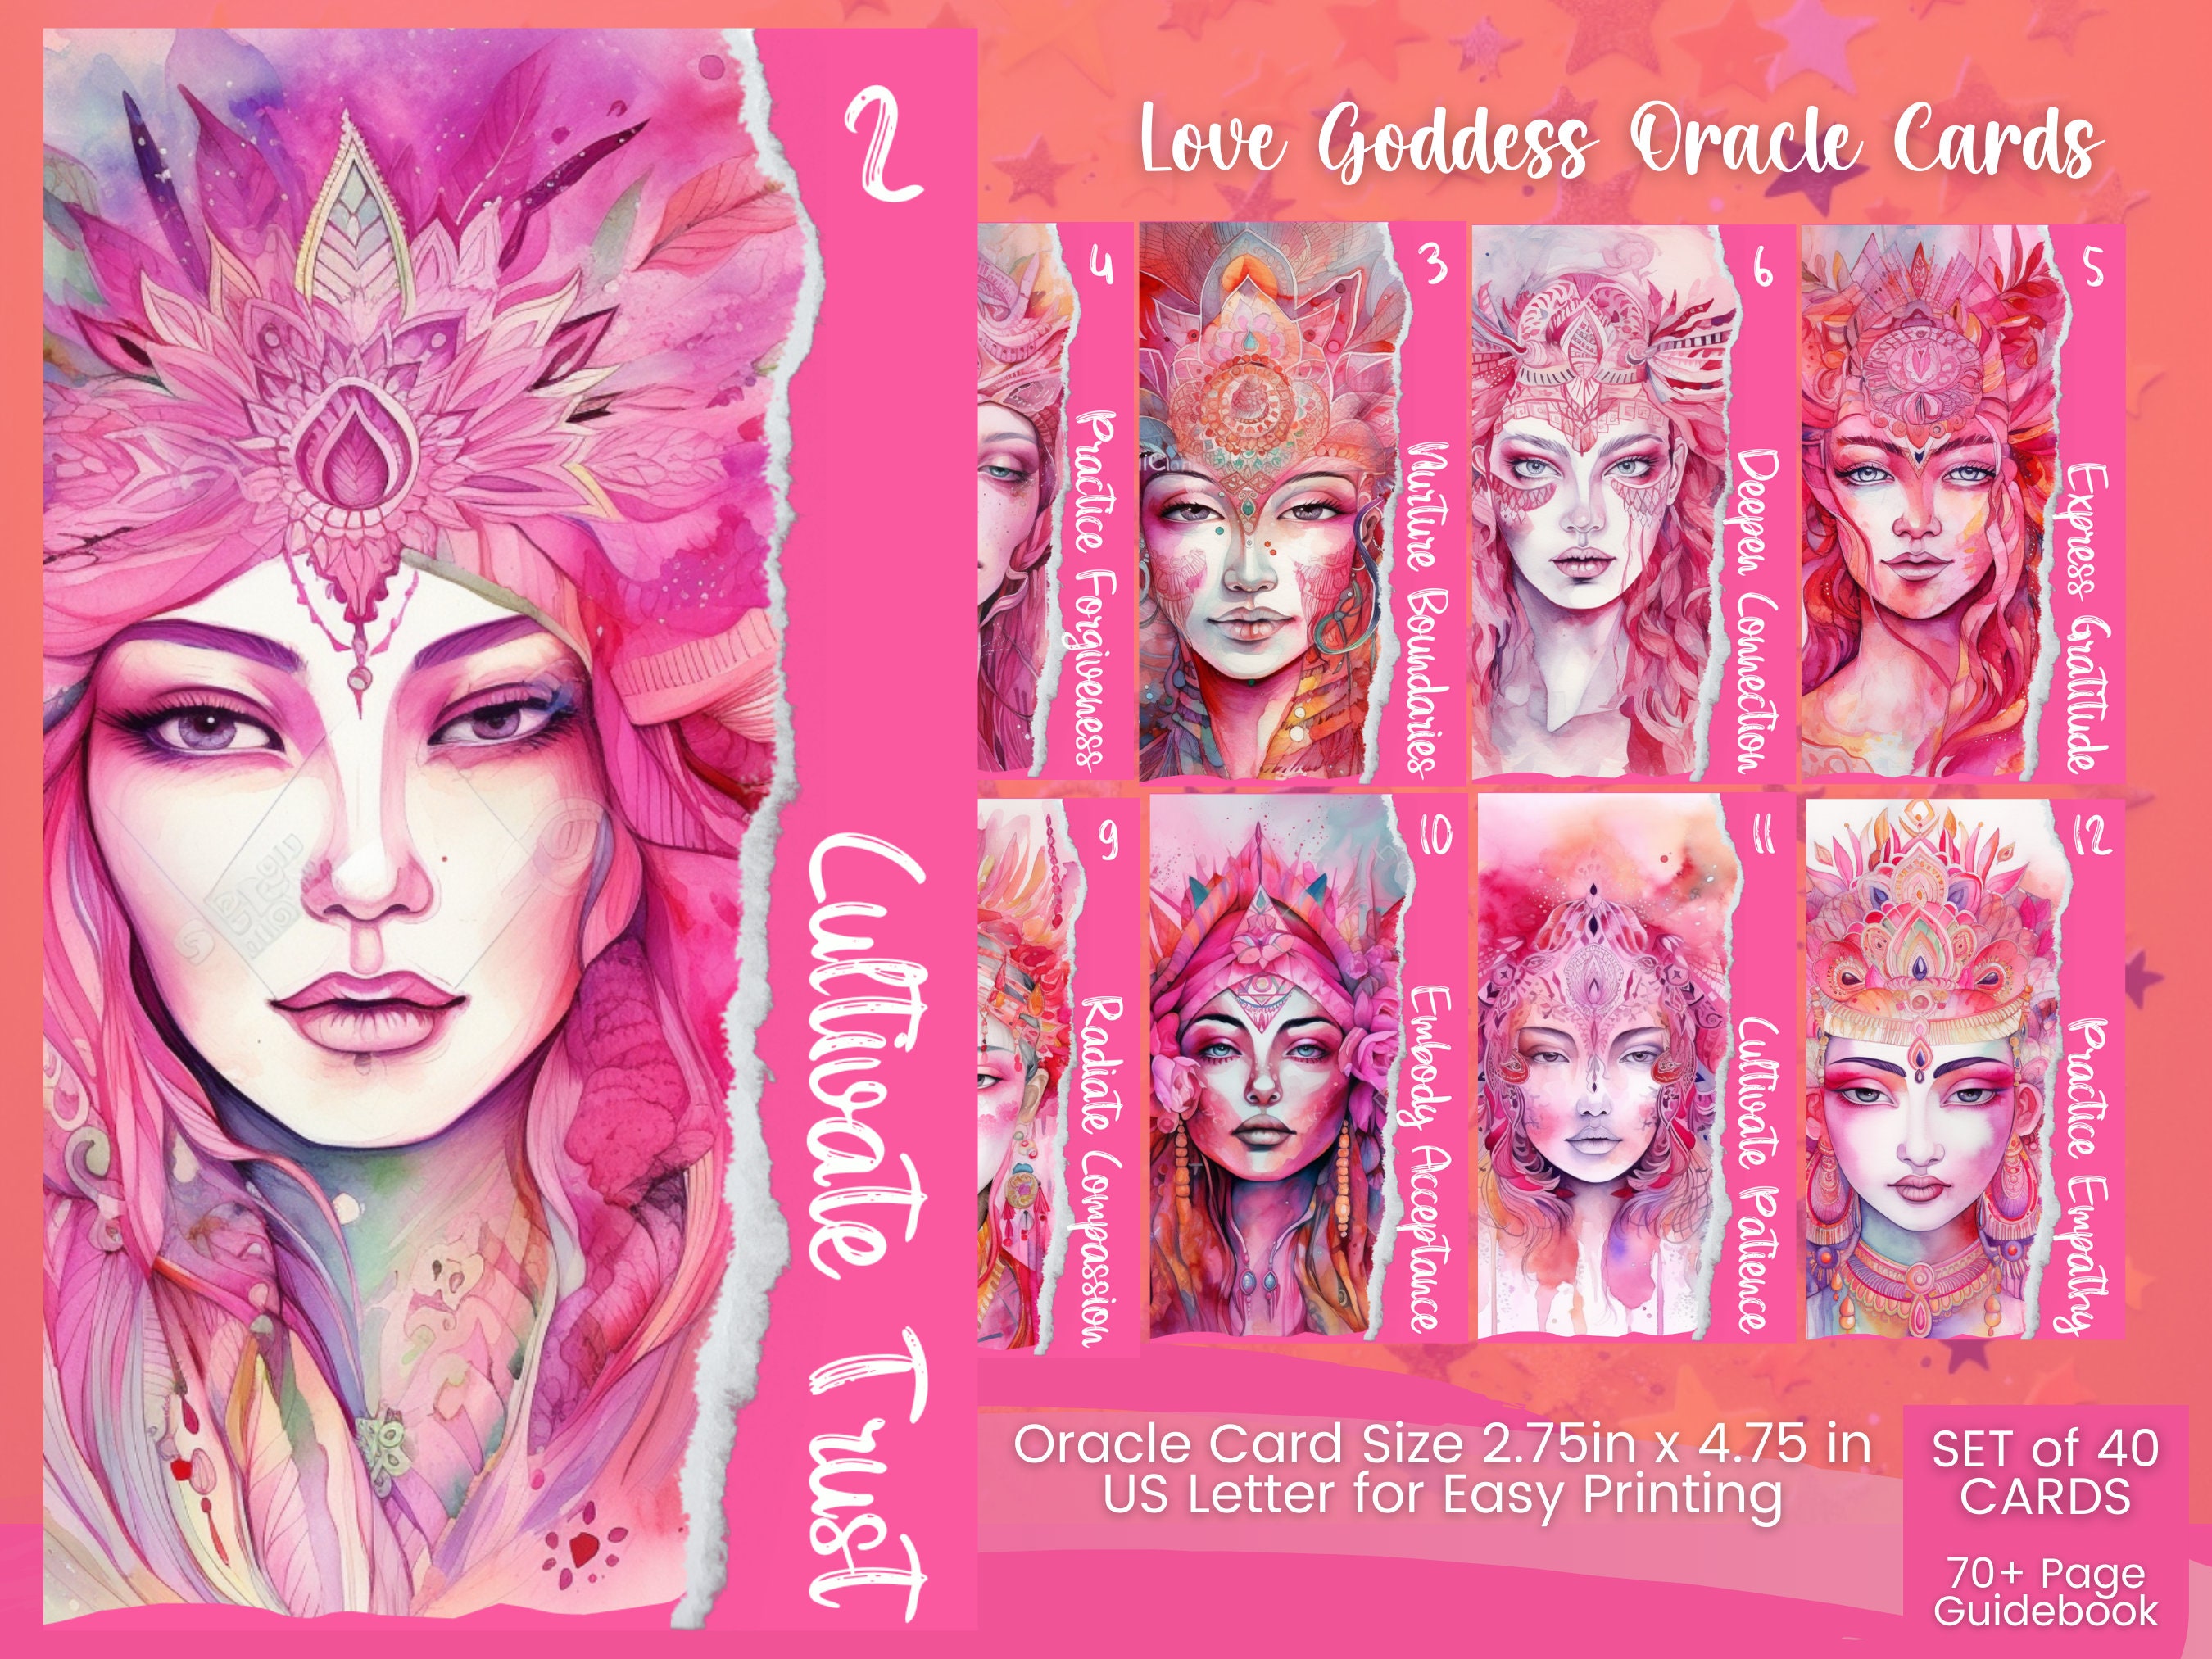 Rainbow Goddess Digital Planner Stickers Graphic by Jackie Schwabe